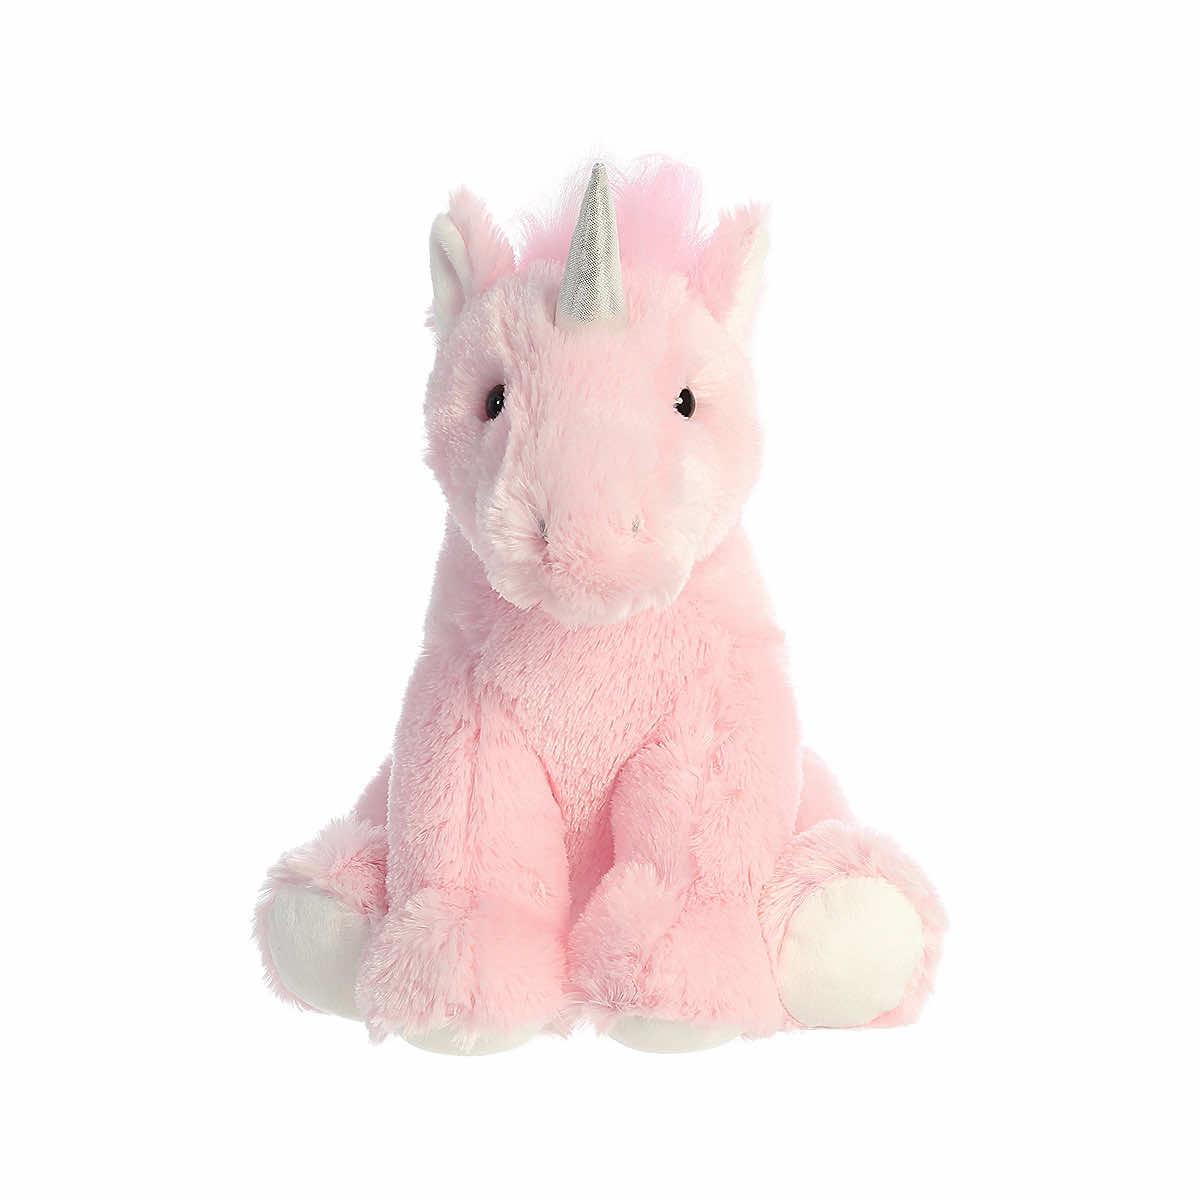  Pink Unicorn Plush Toy